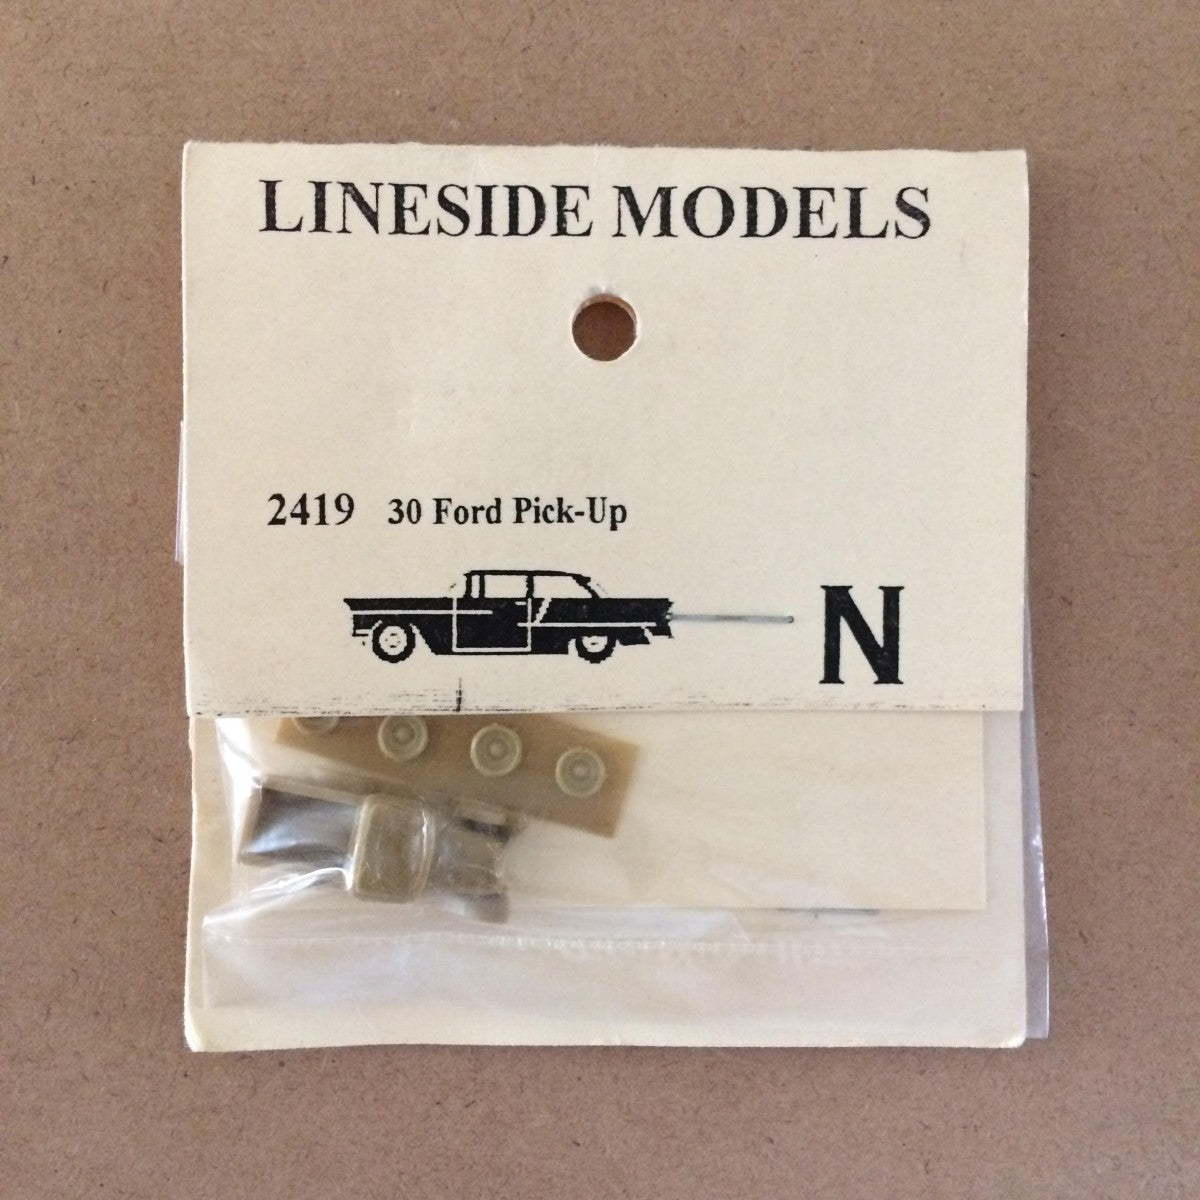 Lineside Models 2419 N 1930 Ford Pick-Up